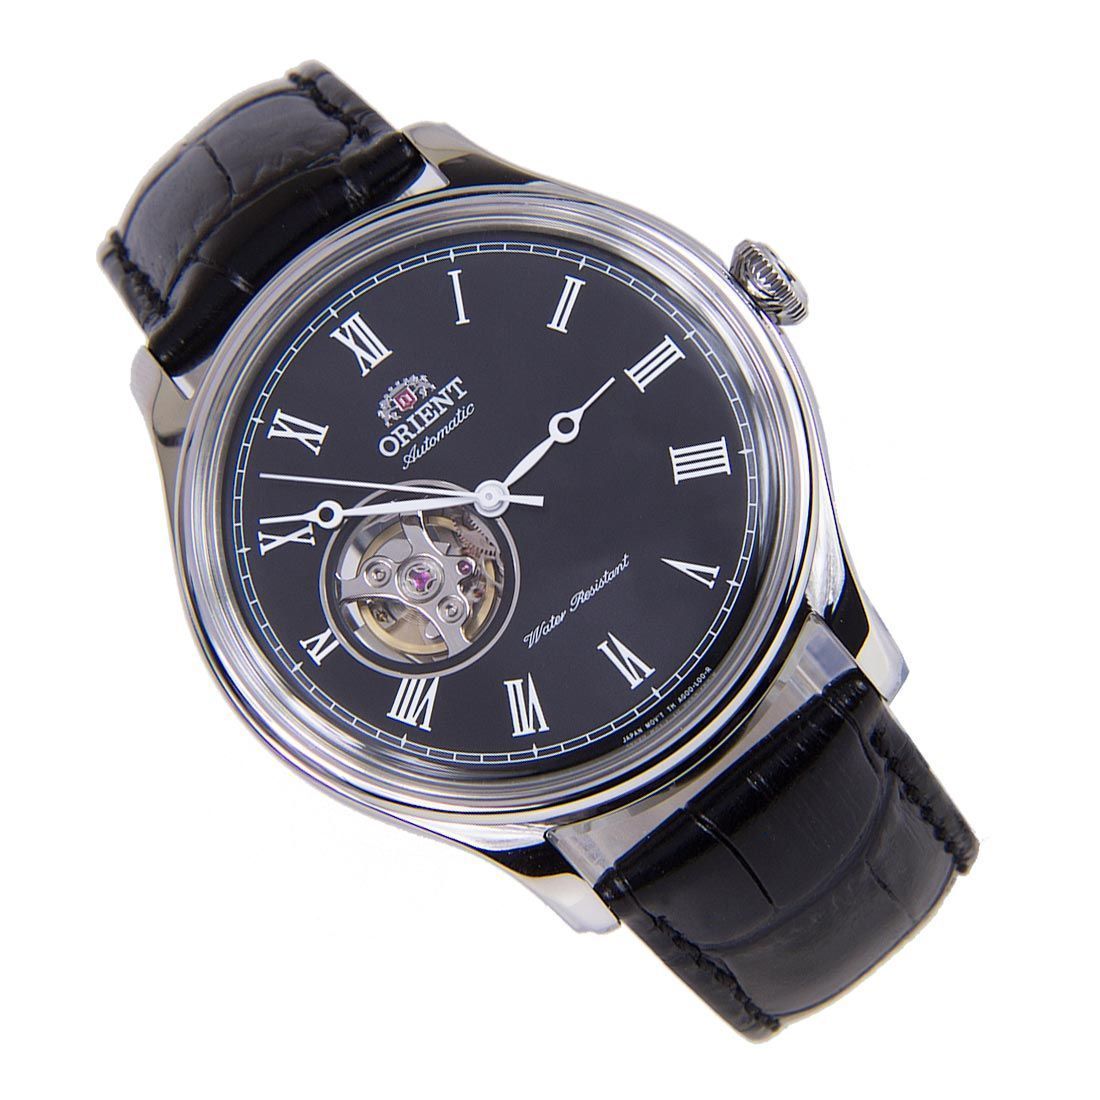 Orient Mechanical Roman Numerals FAG00003B0 AG00003B Leather Black Dial Watch -Orient